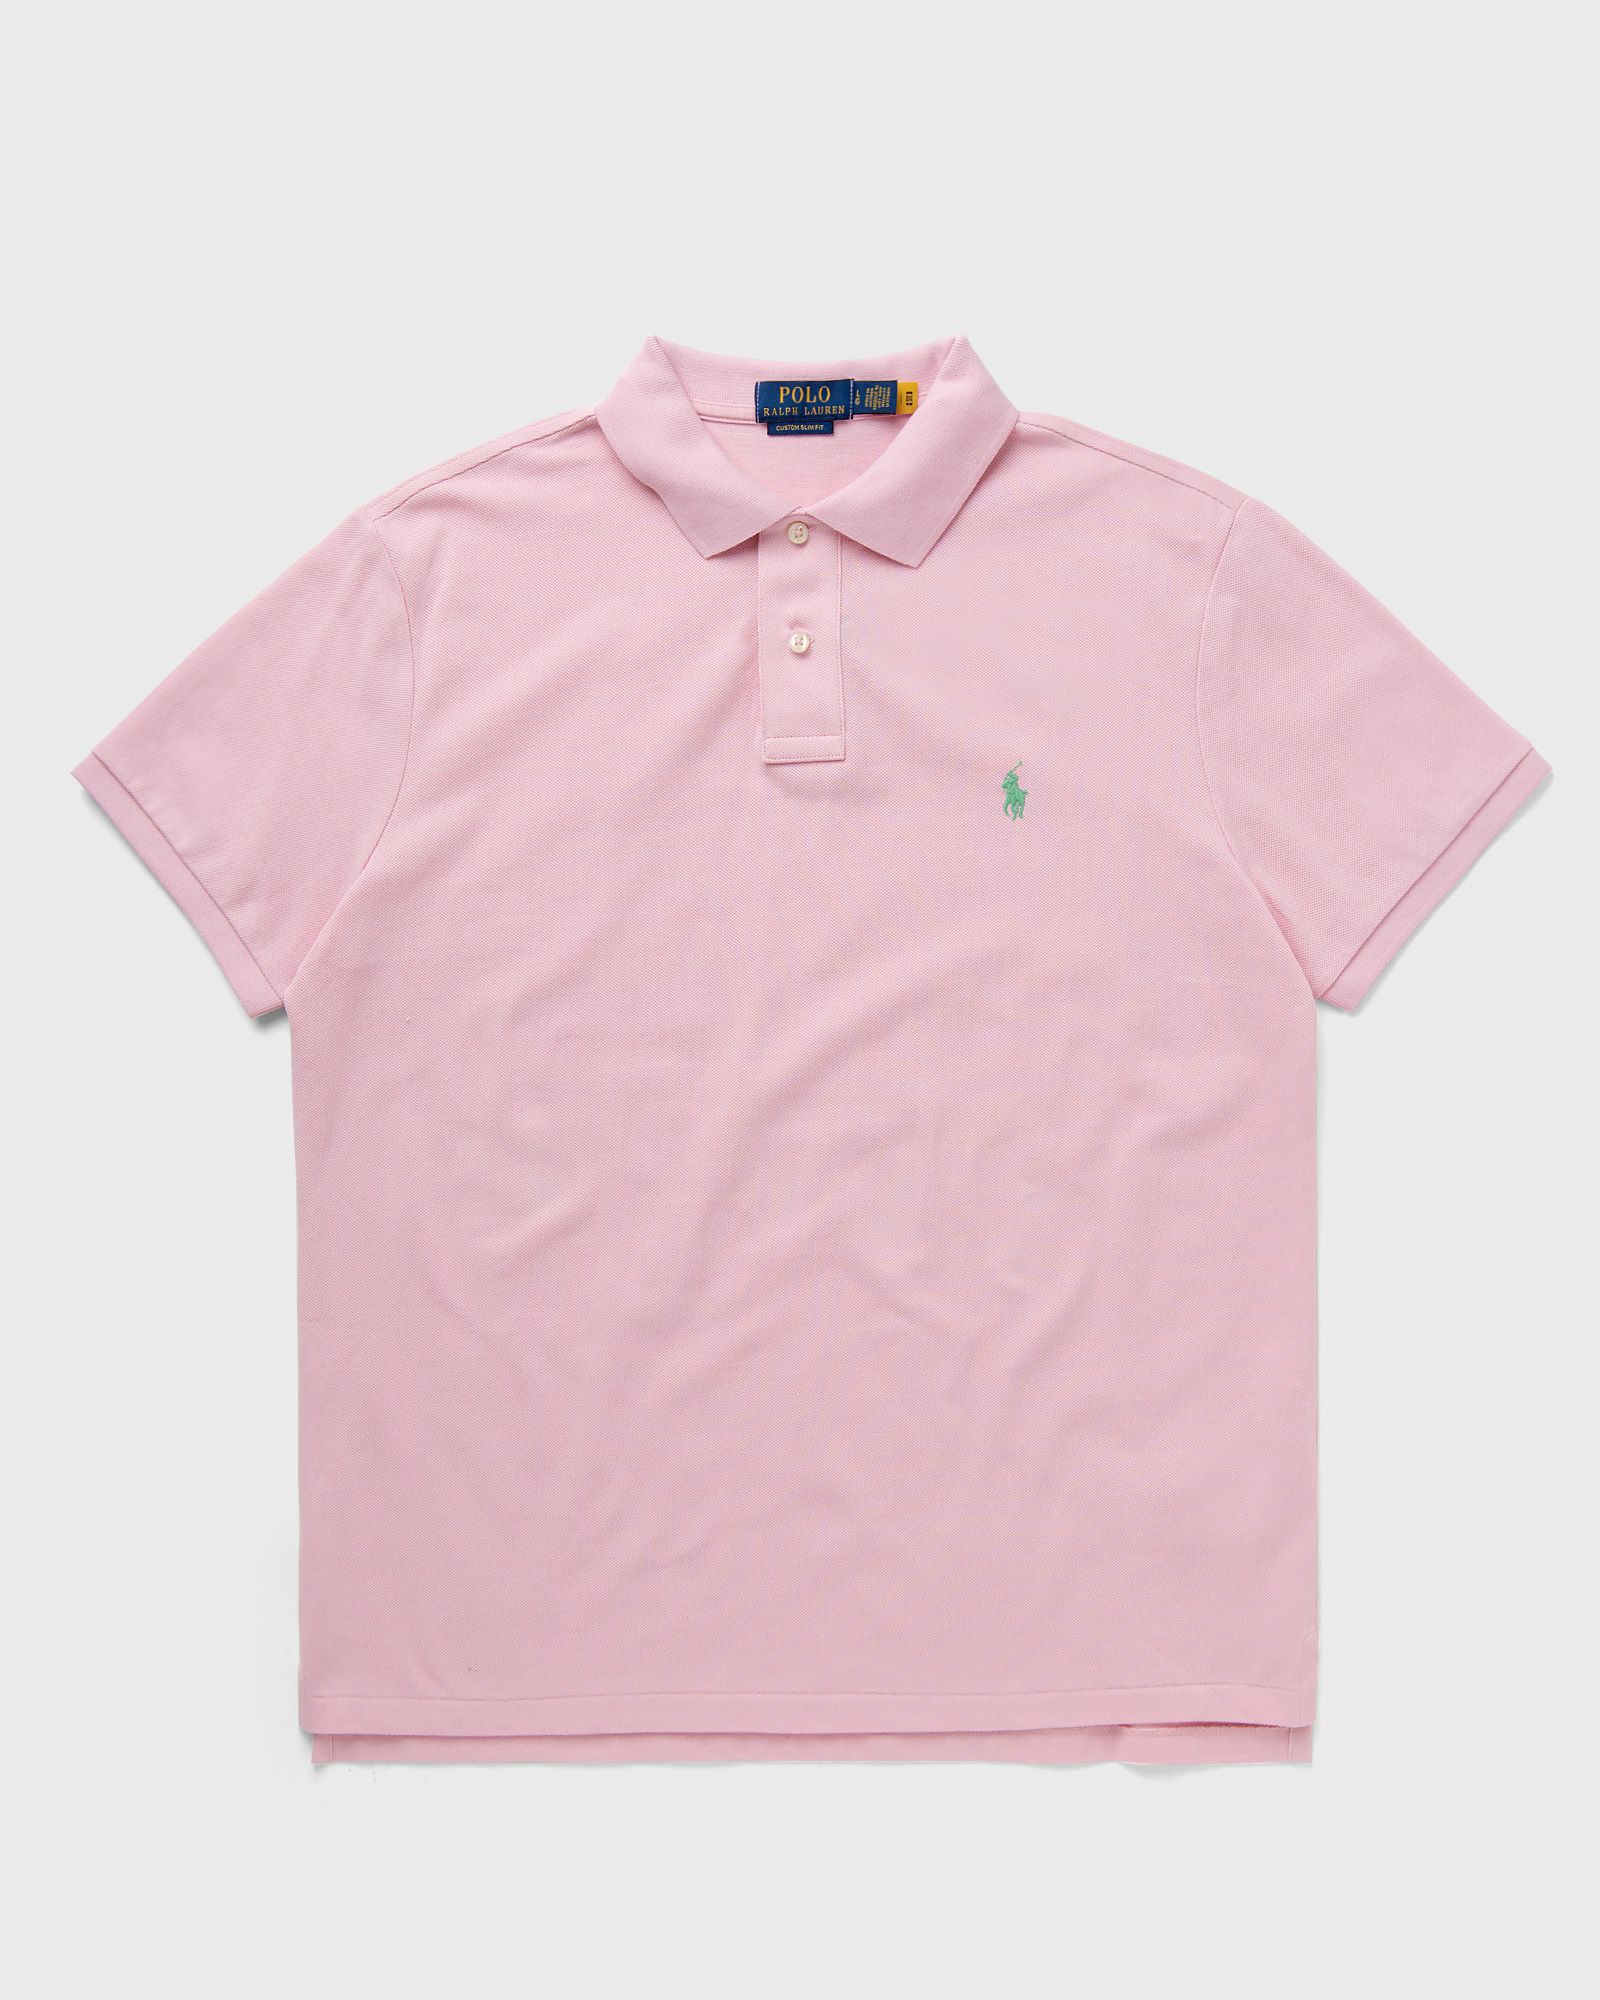 Polo Ralph Lauren - short sleeve-knit men polos pink in größe:xl